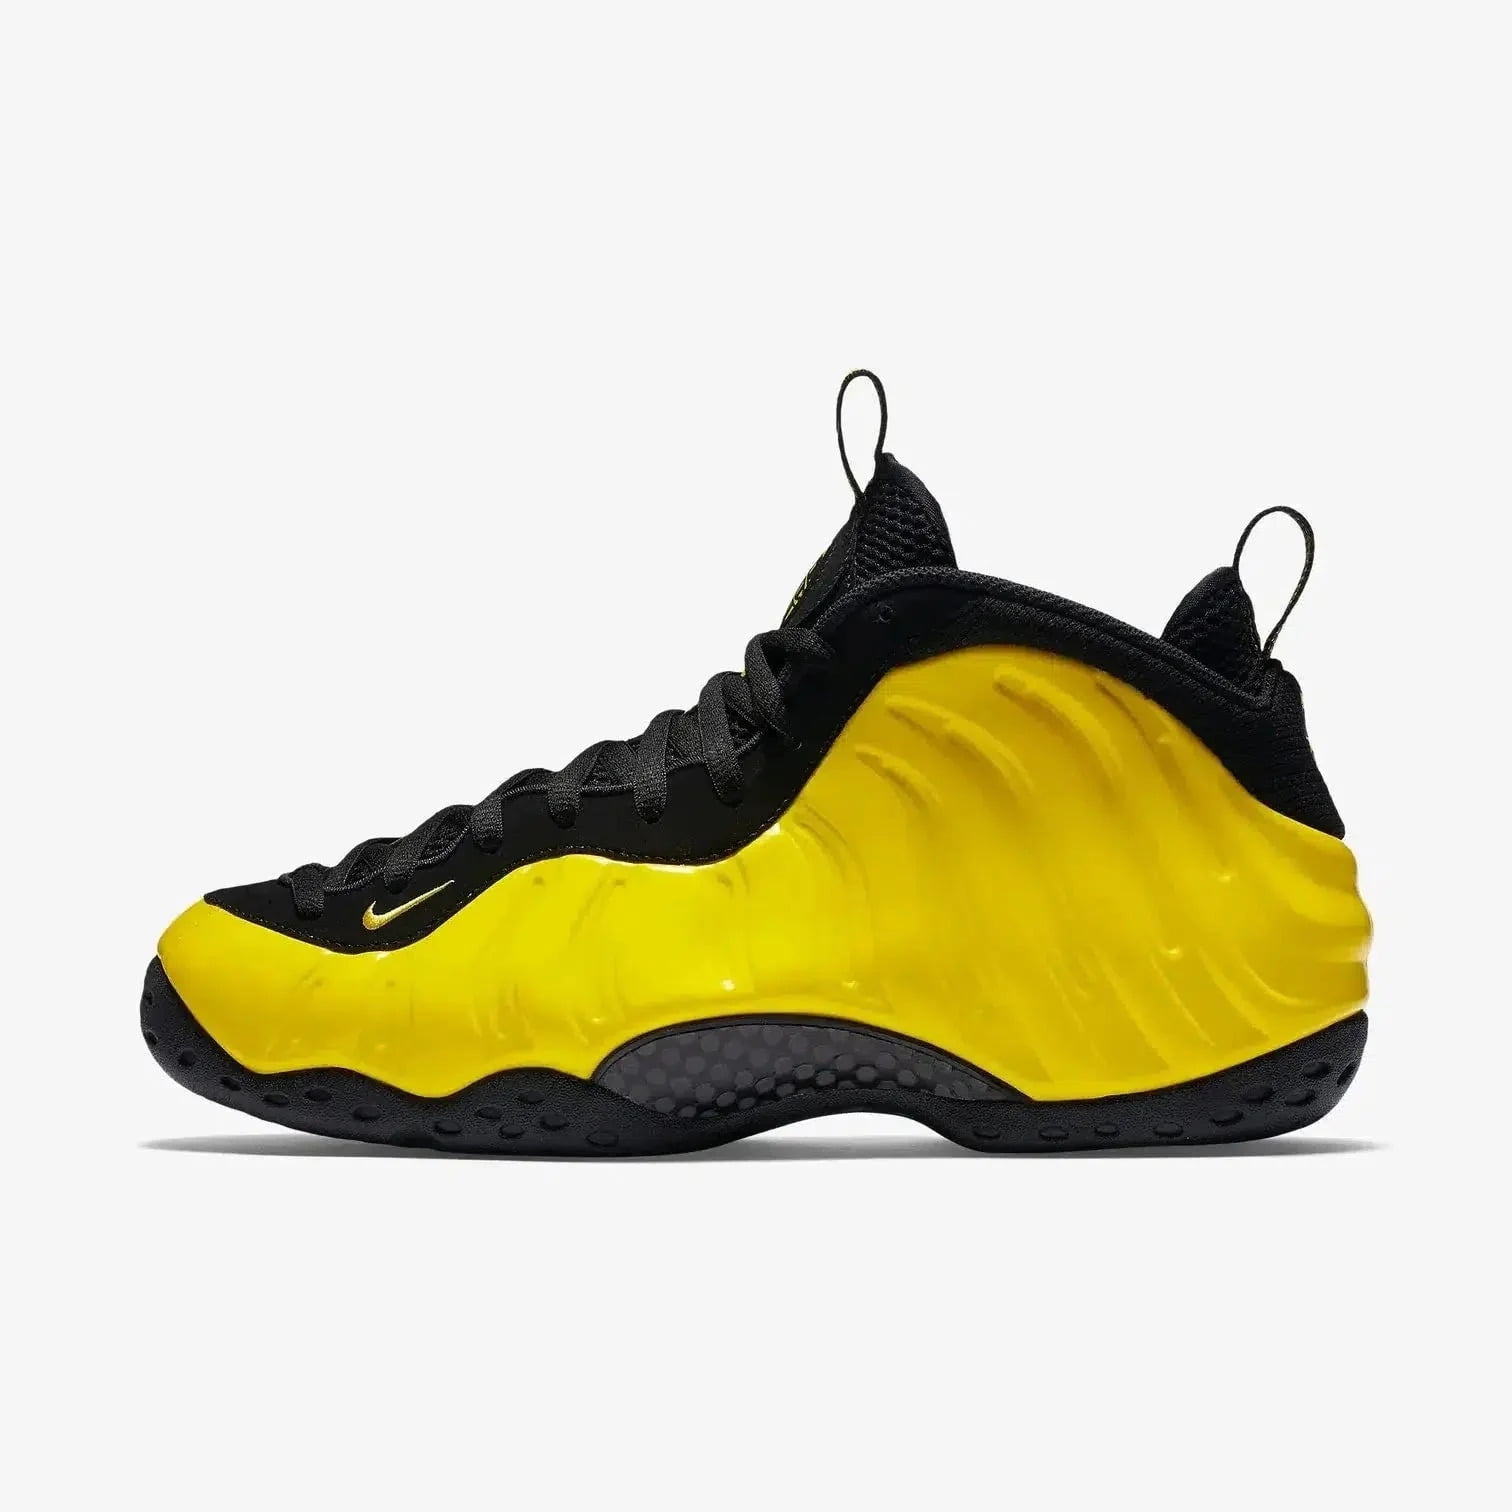 Mens Size 9 - Nike Foamposite Pro Wu-Tang Yellow/Black 314996-701